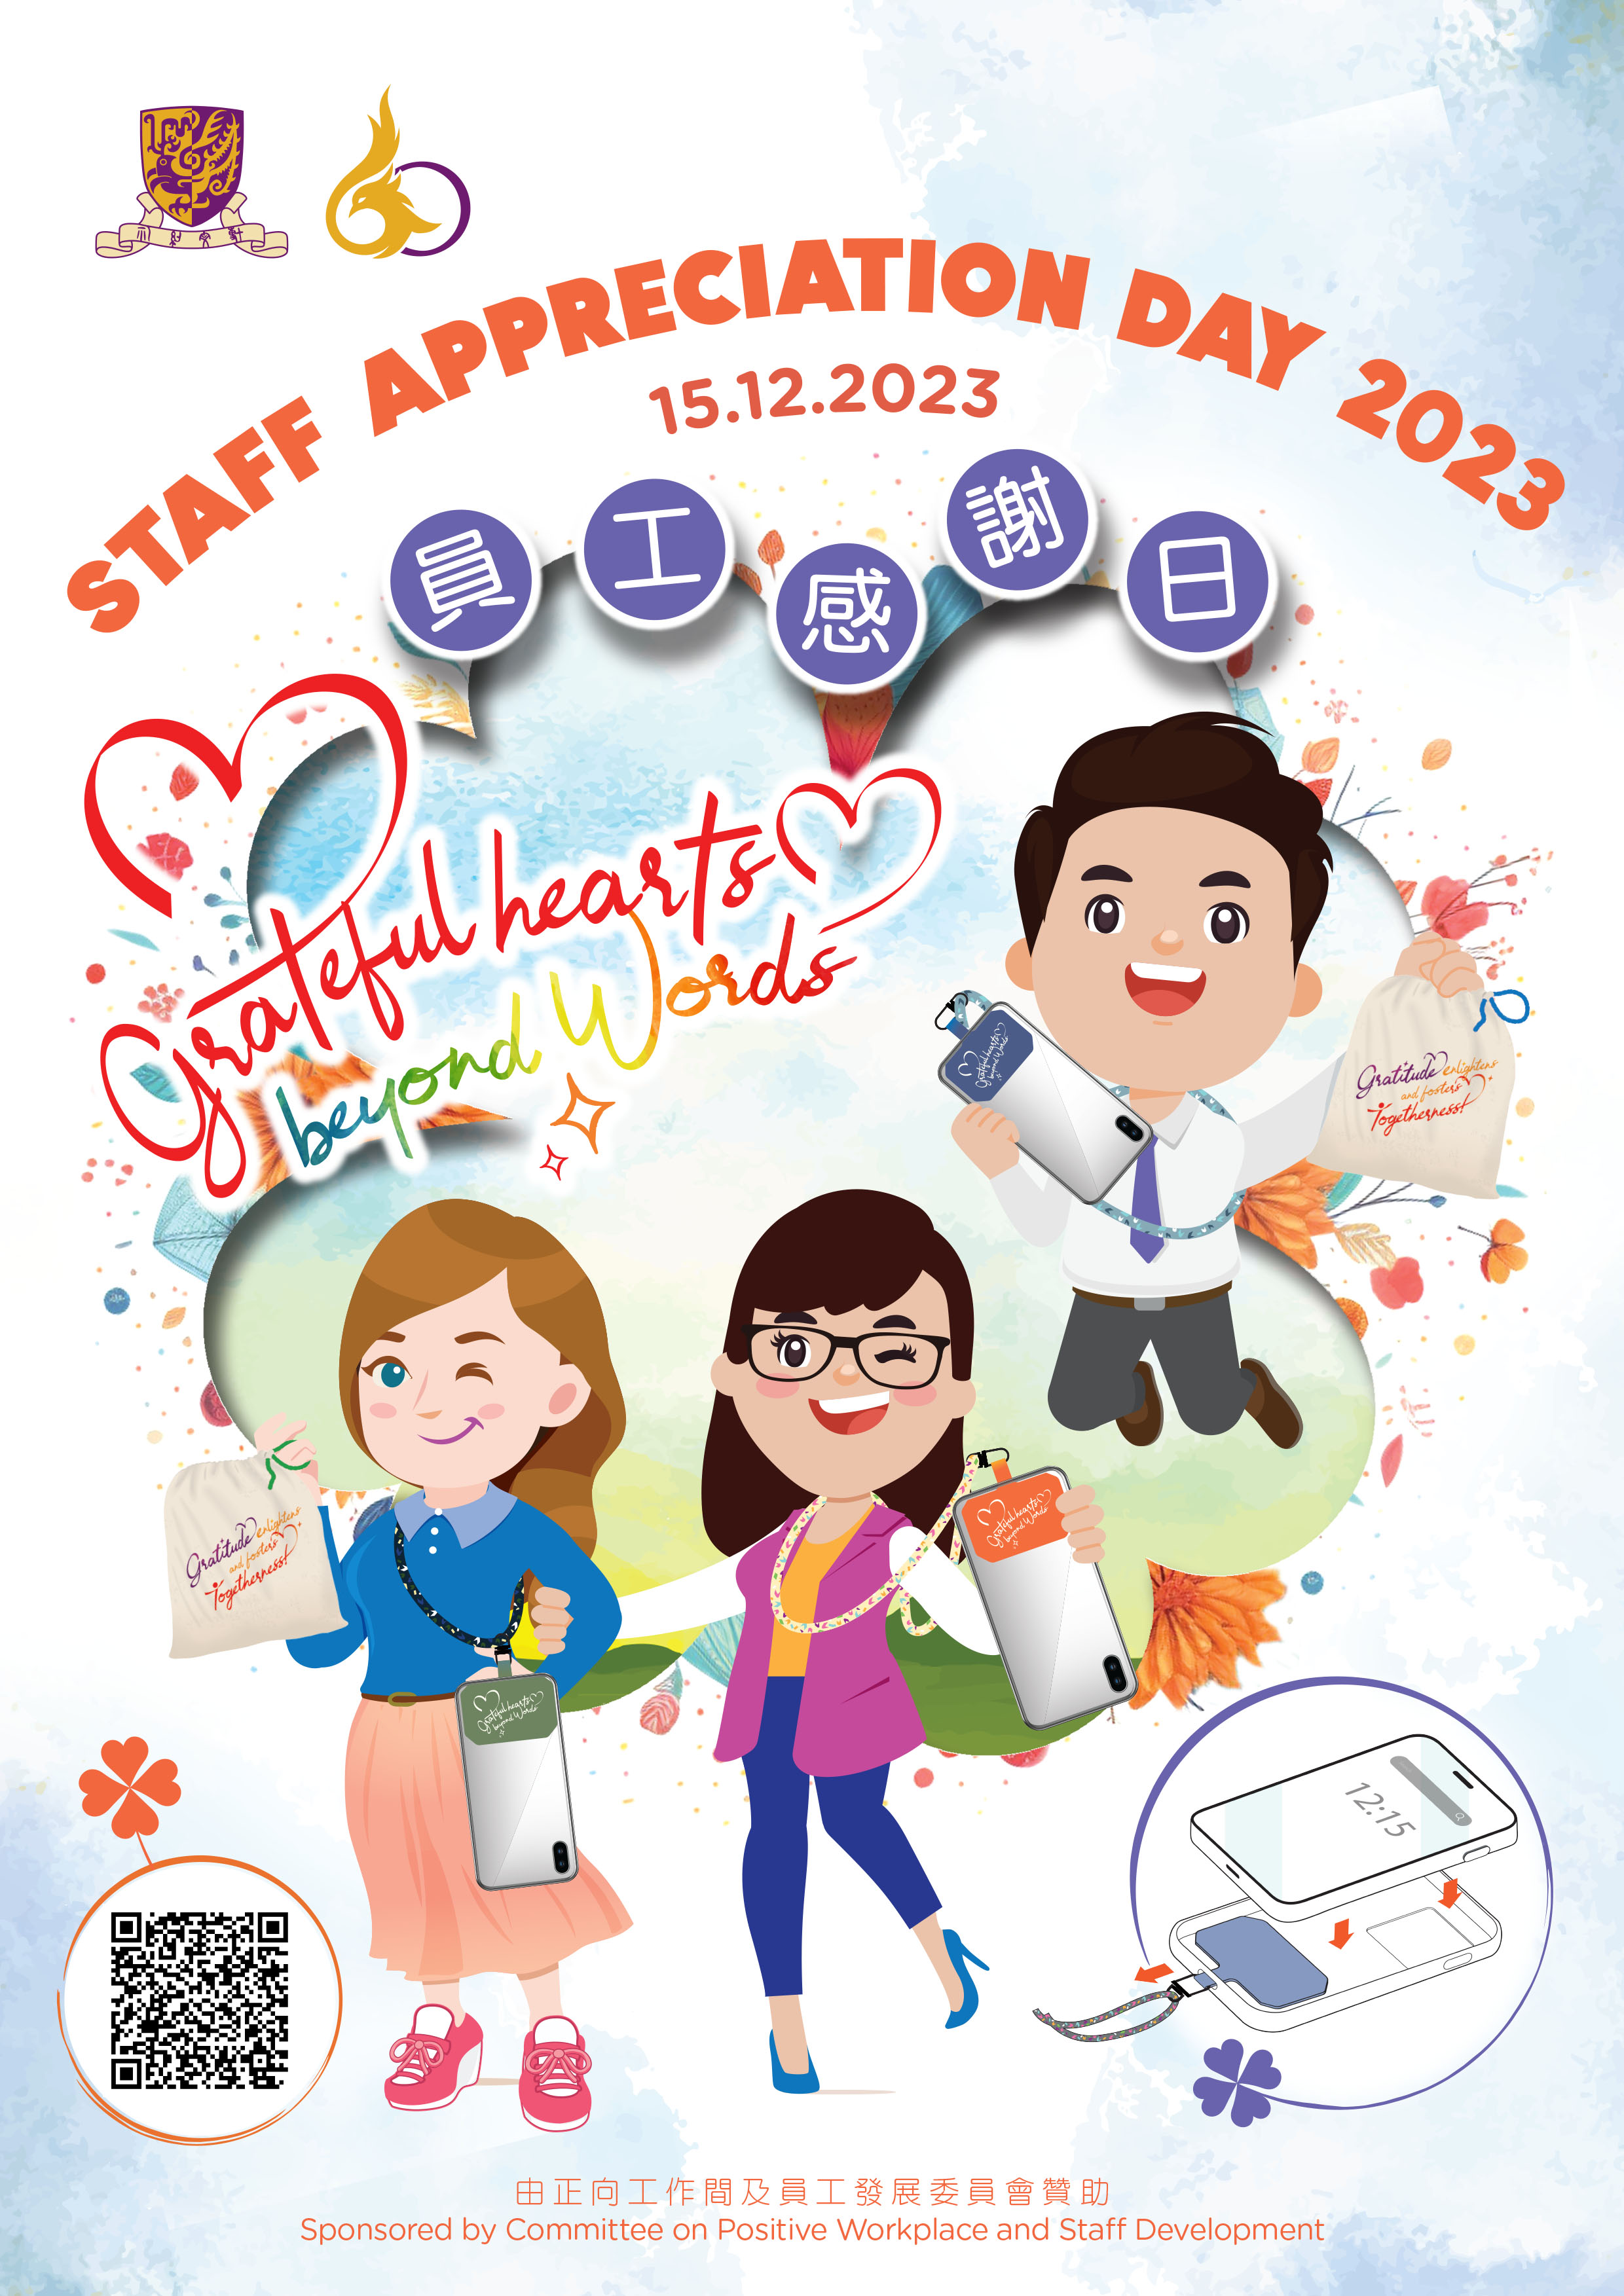 Staff Appreciation Day 2023 Poster